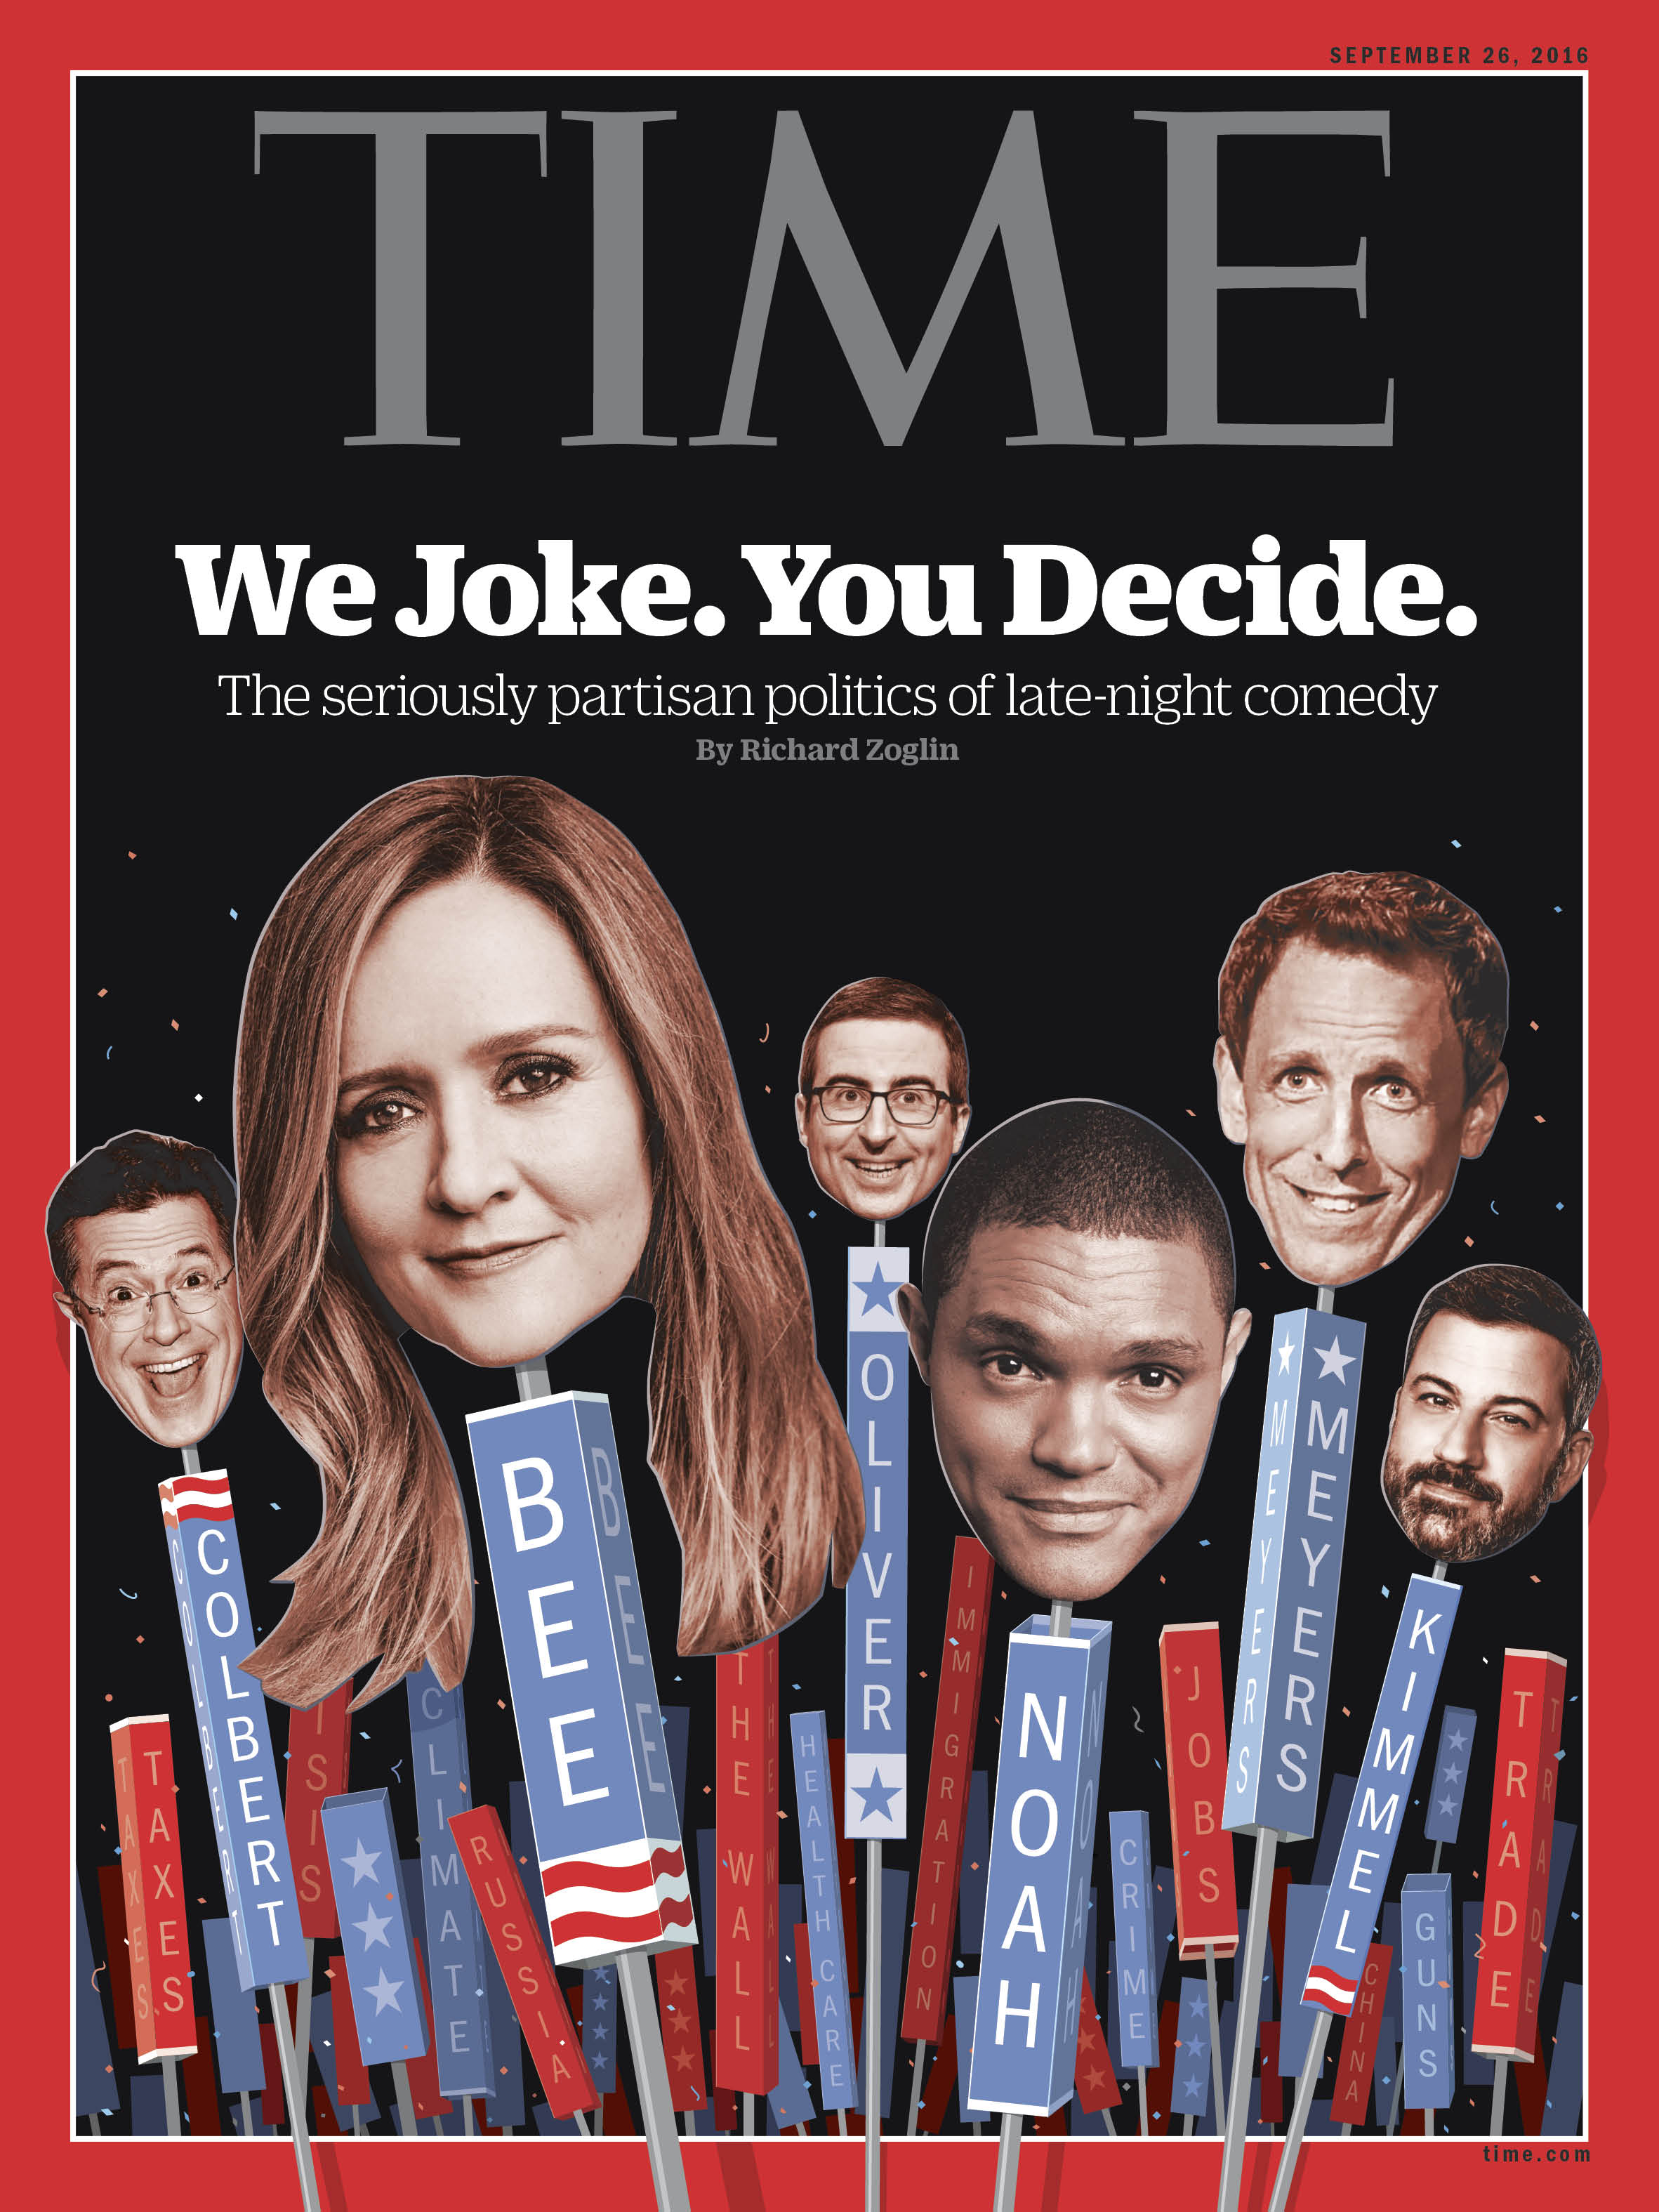 Joke on us. Журнал time. Лица в журнале тайм. Time Magic журнал. Журнал time 2000.